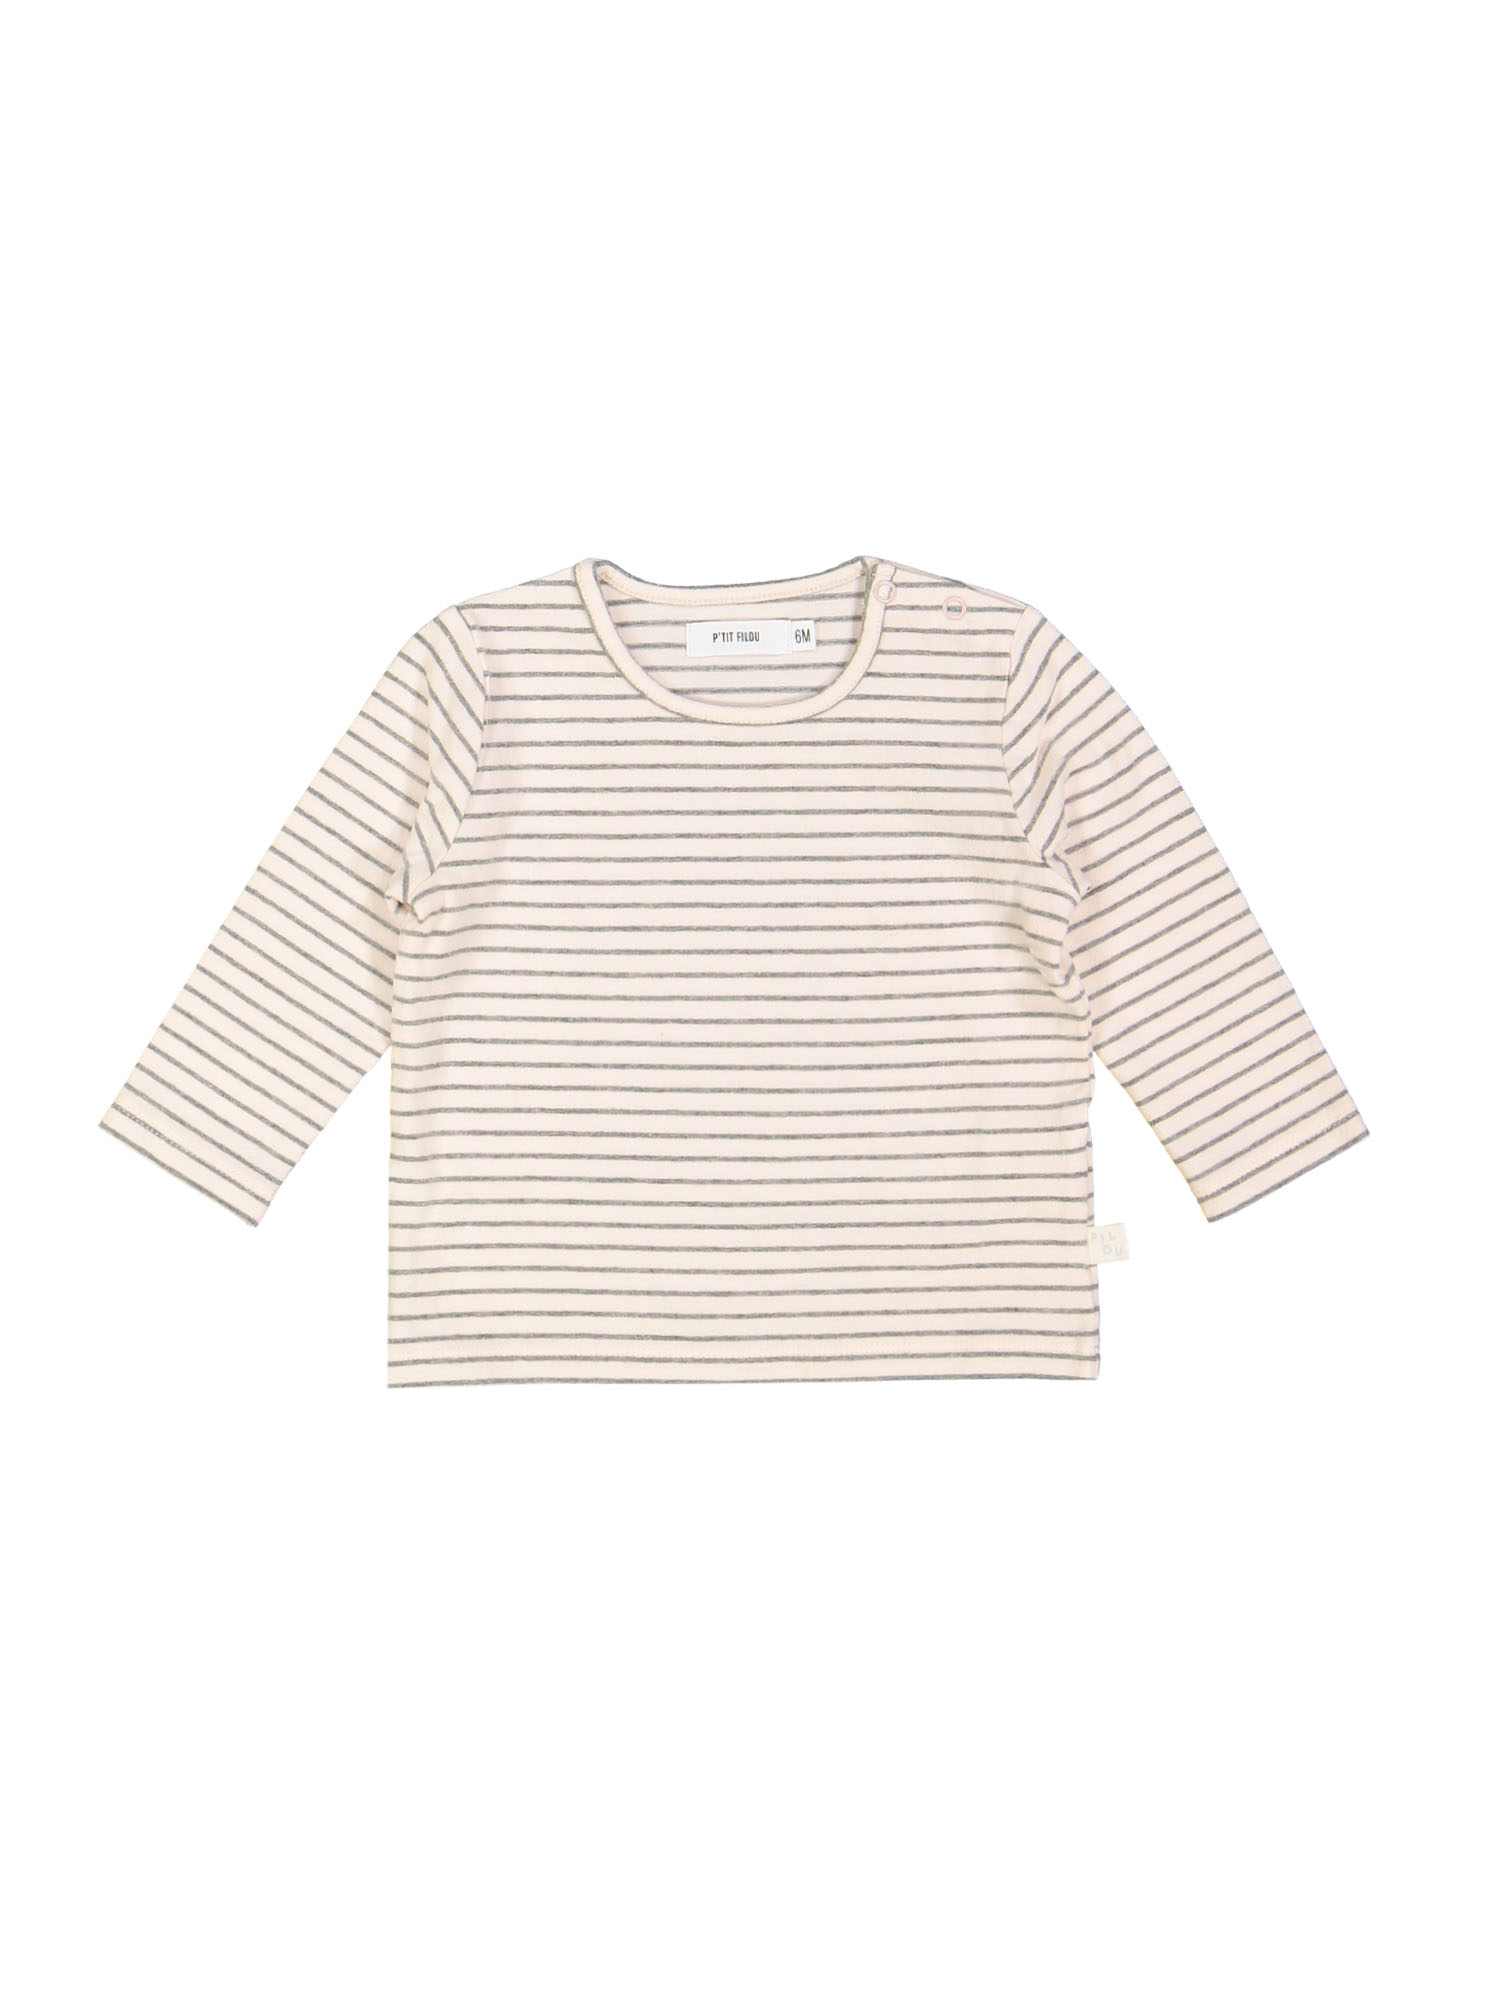 T-shirt streep roze 09m